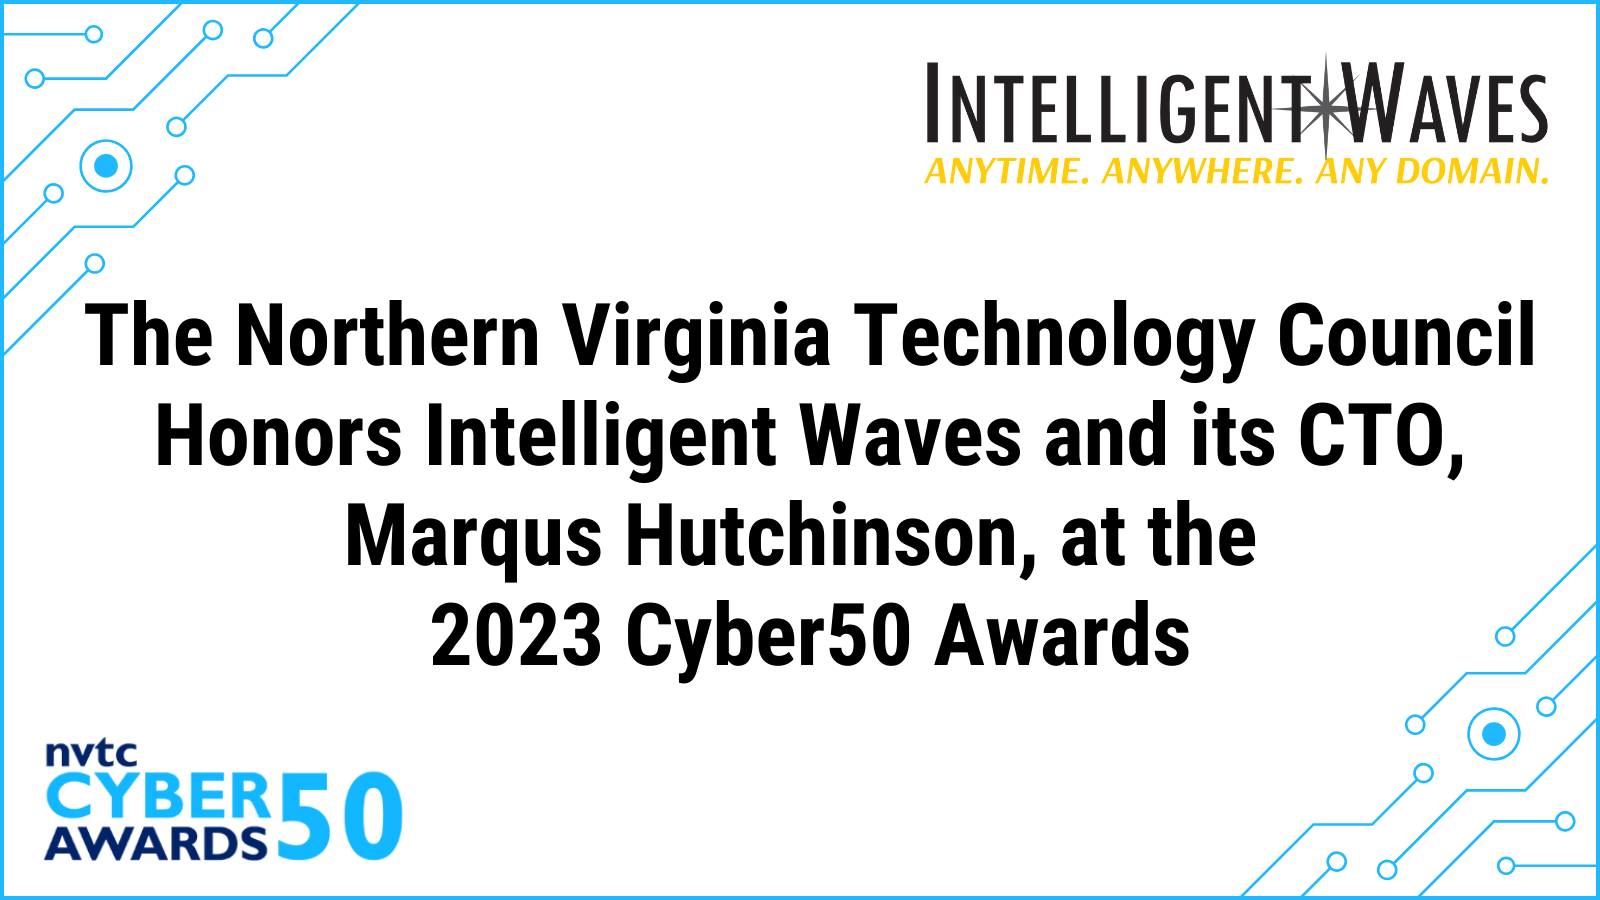 IW & Marqus Hutchinson win 2023 NVTC Cyber50 Award